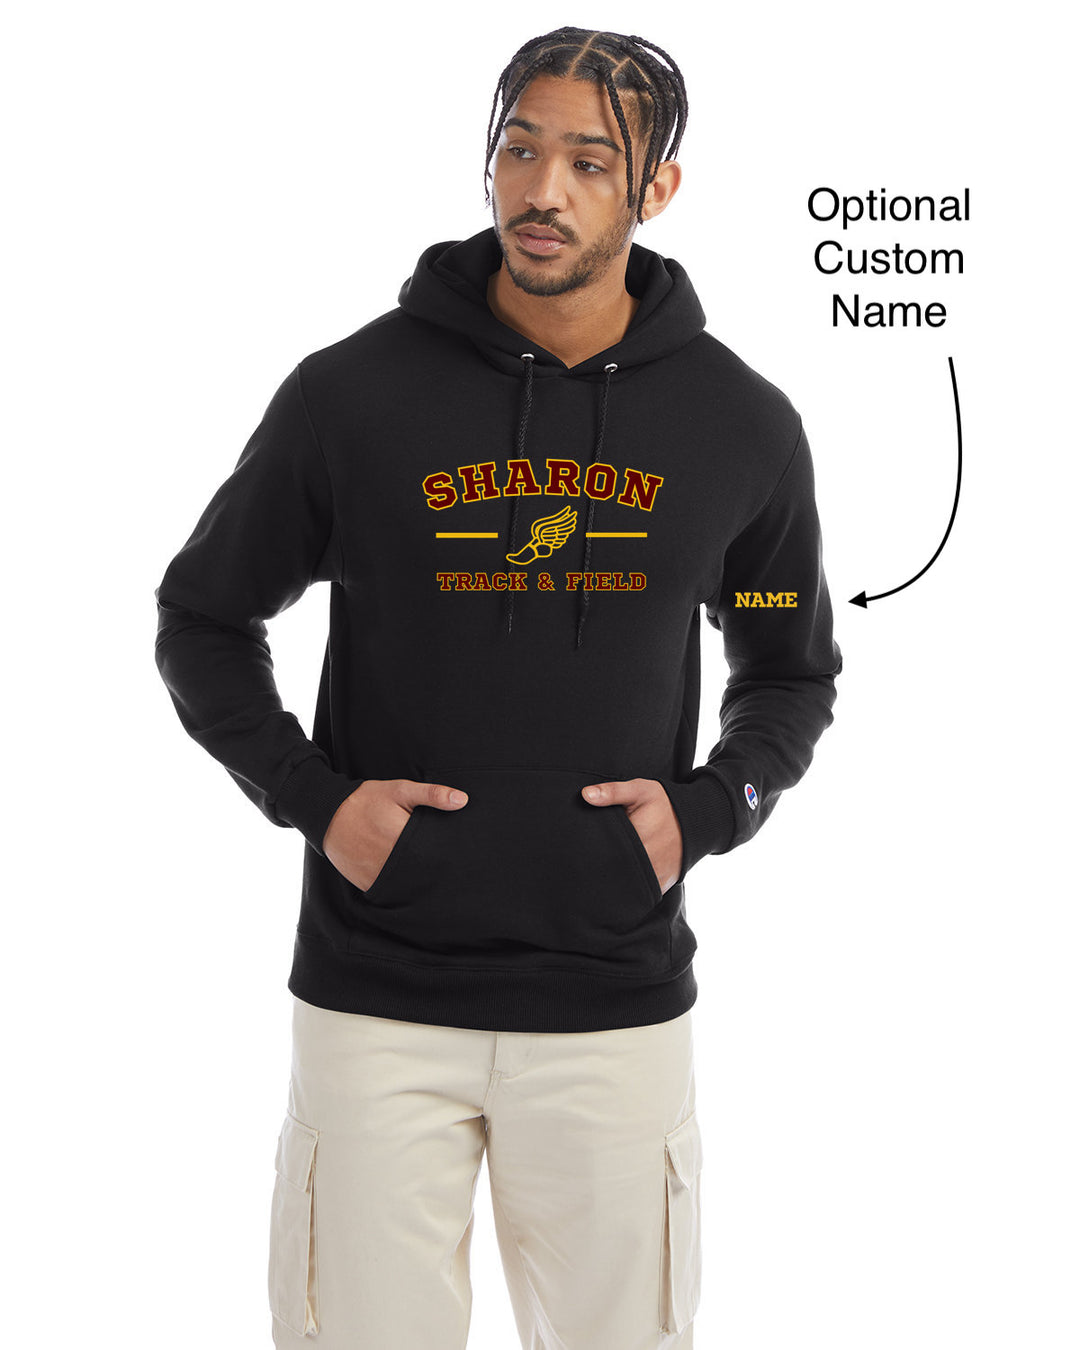 Sharon Track & Field - Unisex Champion Pullover Hooded Sweatshirt (S700)